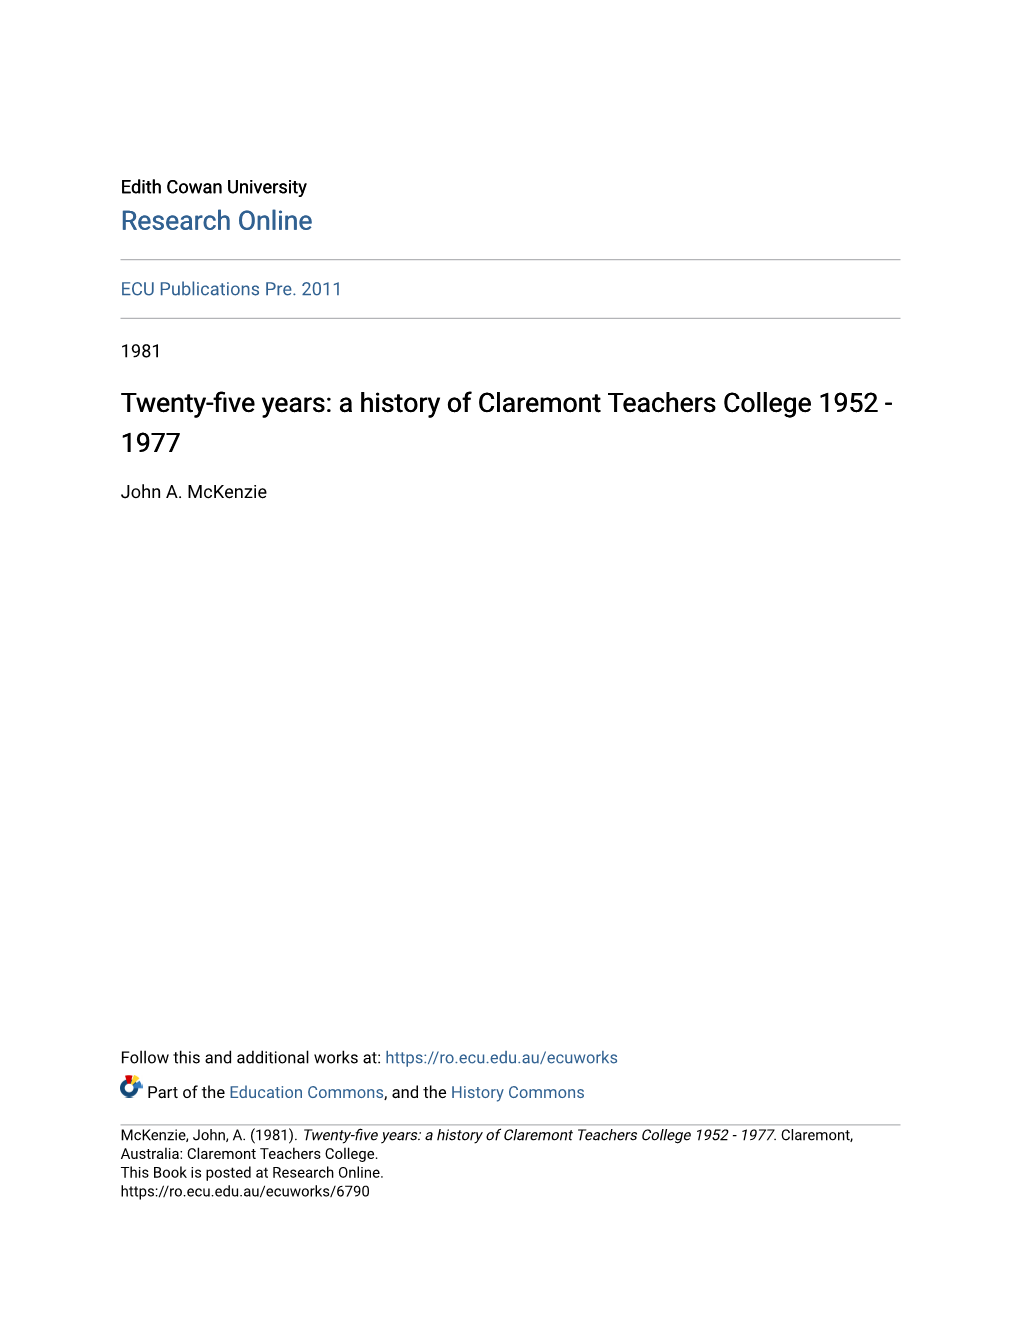 Twenty-Five Years: a History of Claremont Teachers College 1952 - 1977